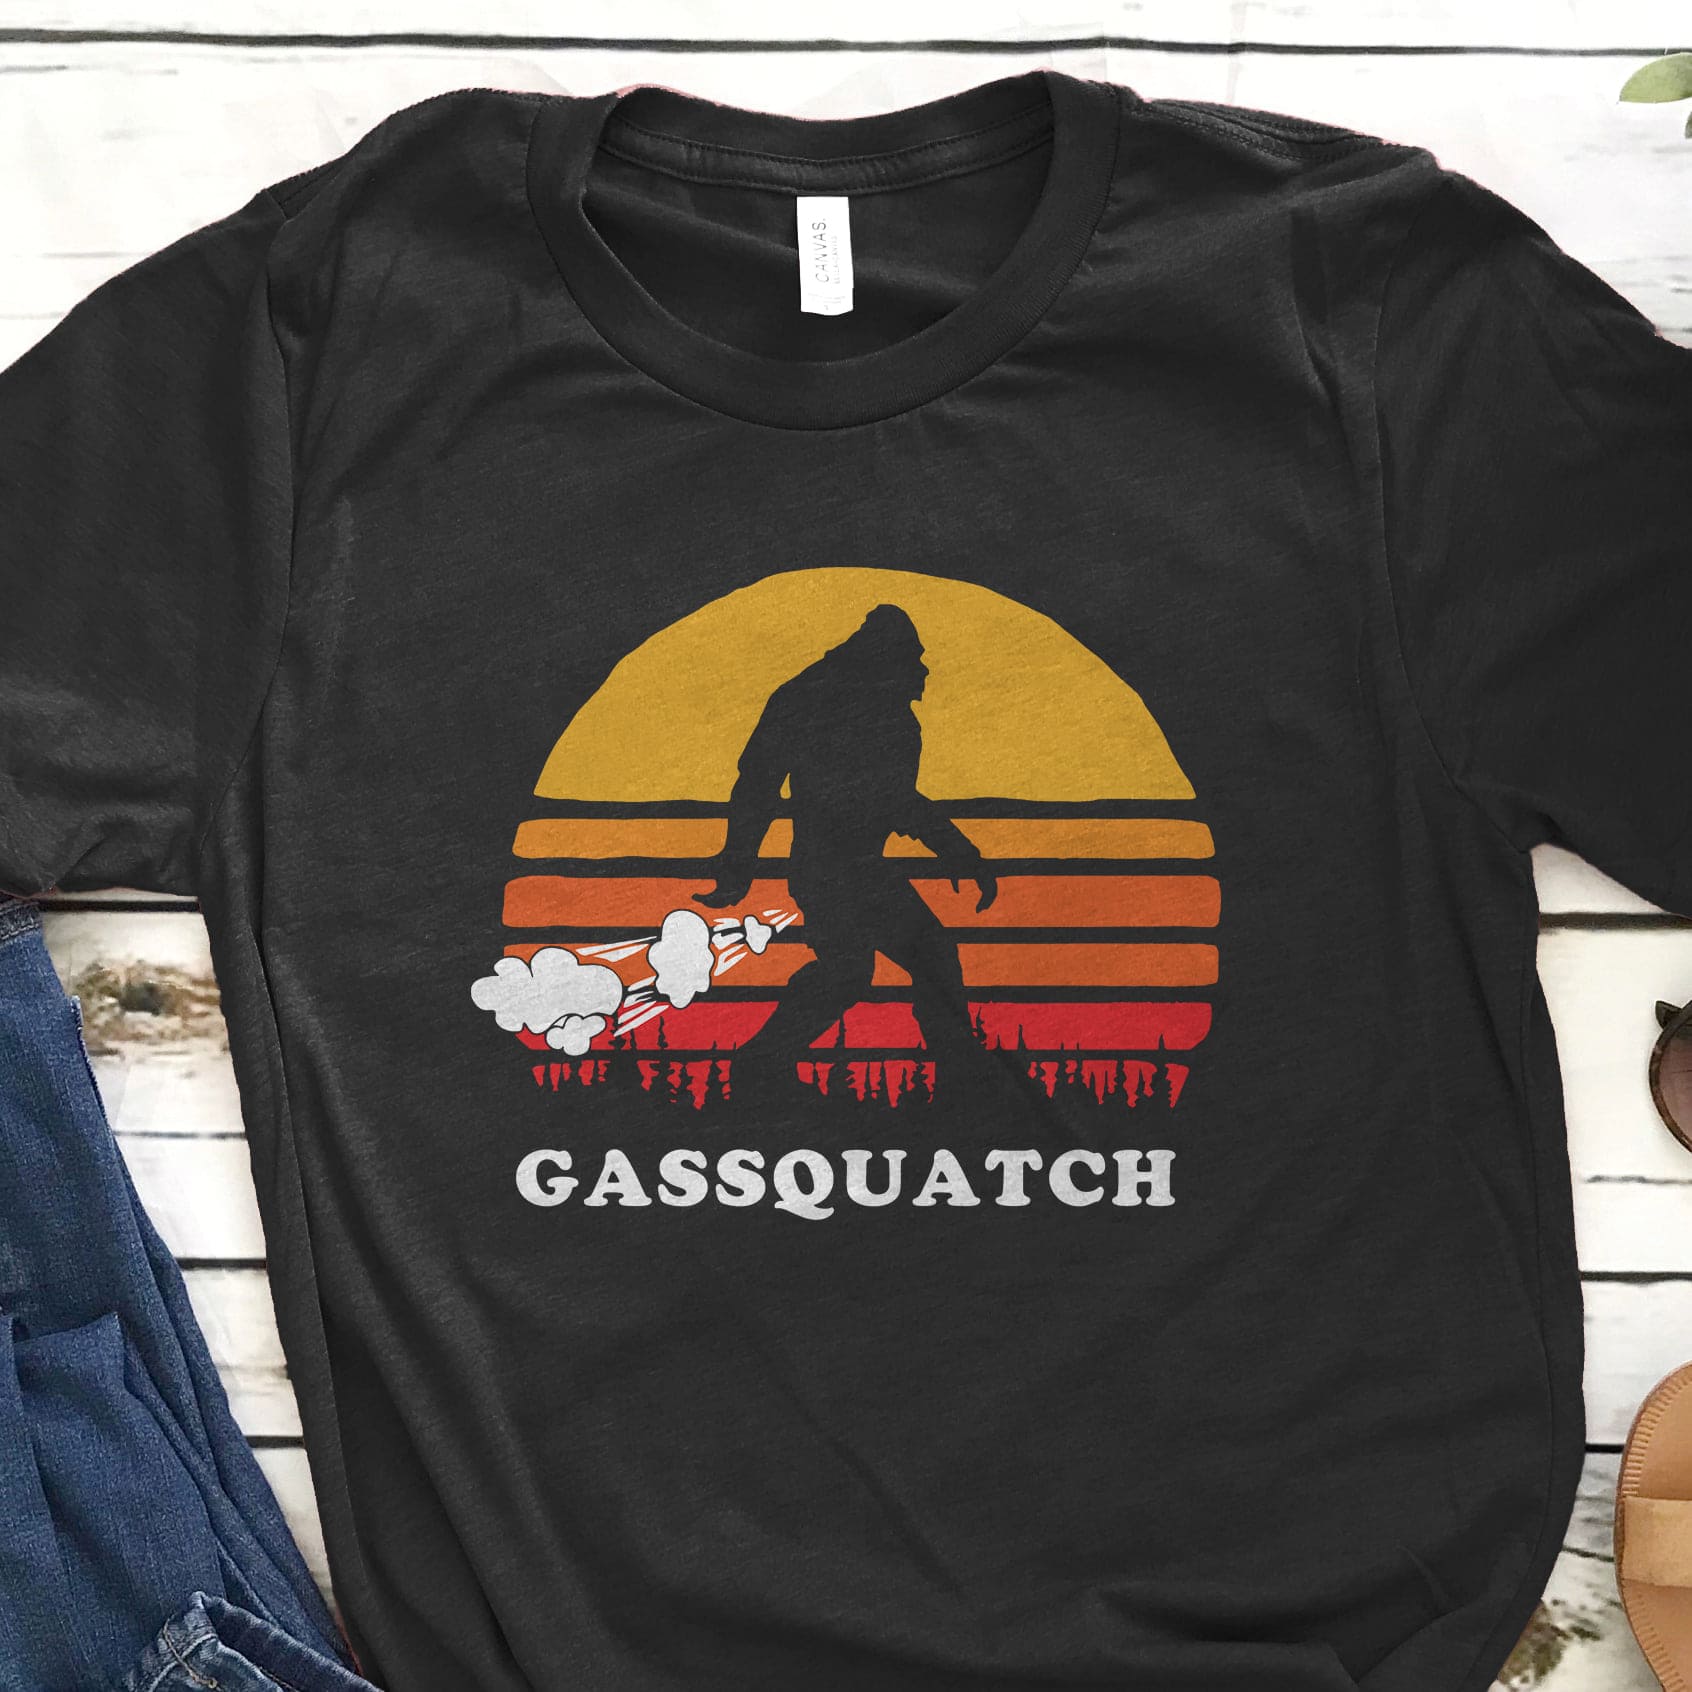 Gassquatch T-shirt - Bigfoot graphic T-shirt, Bigfoot fart